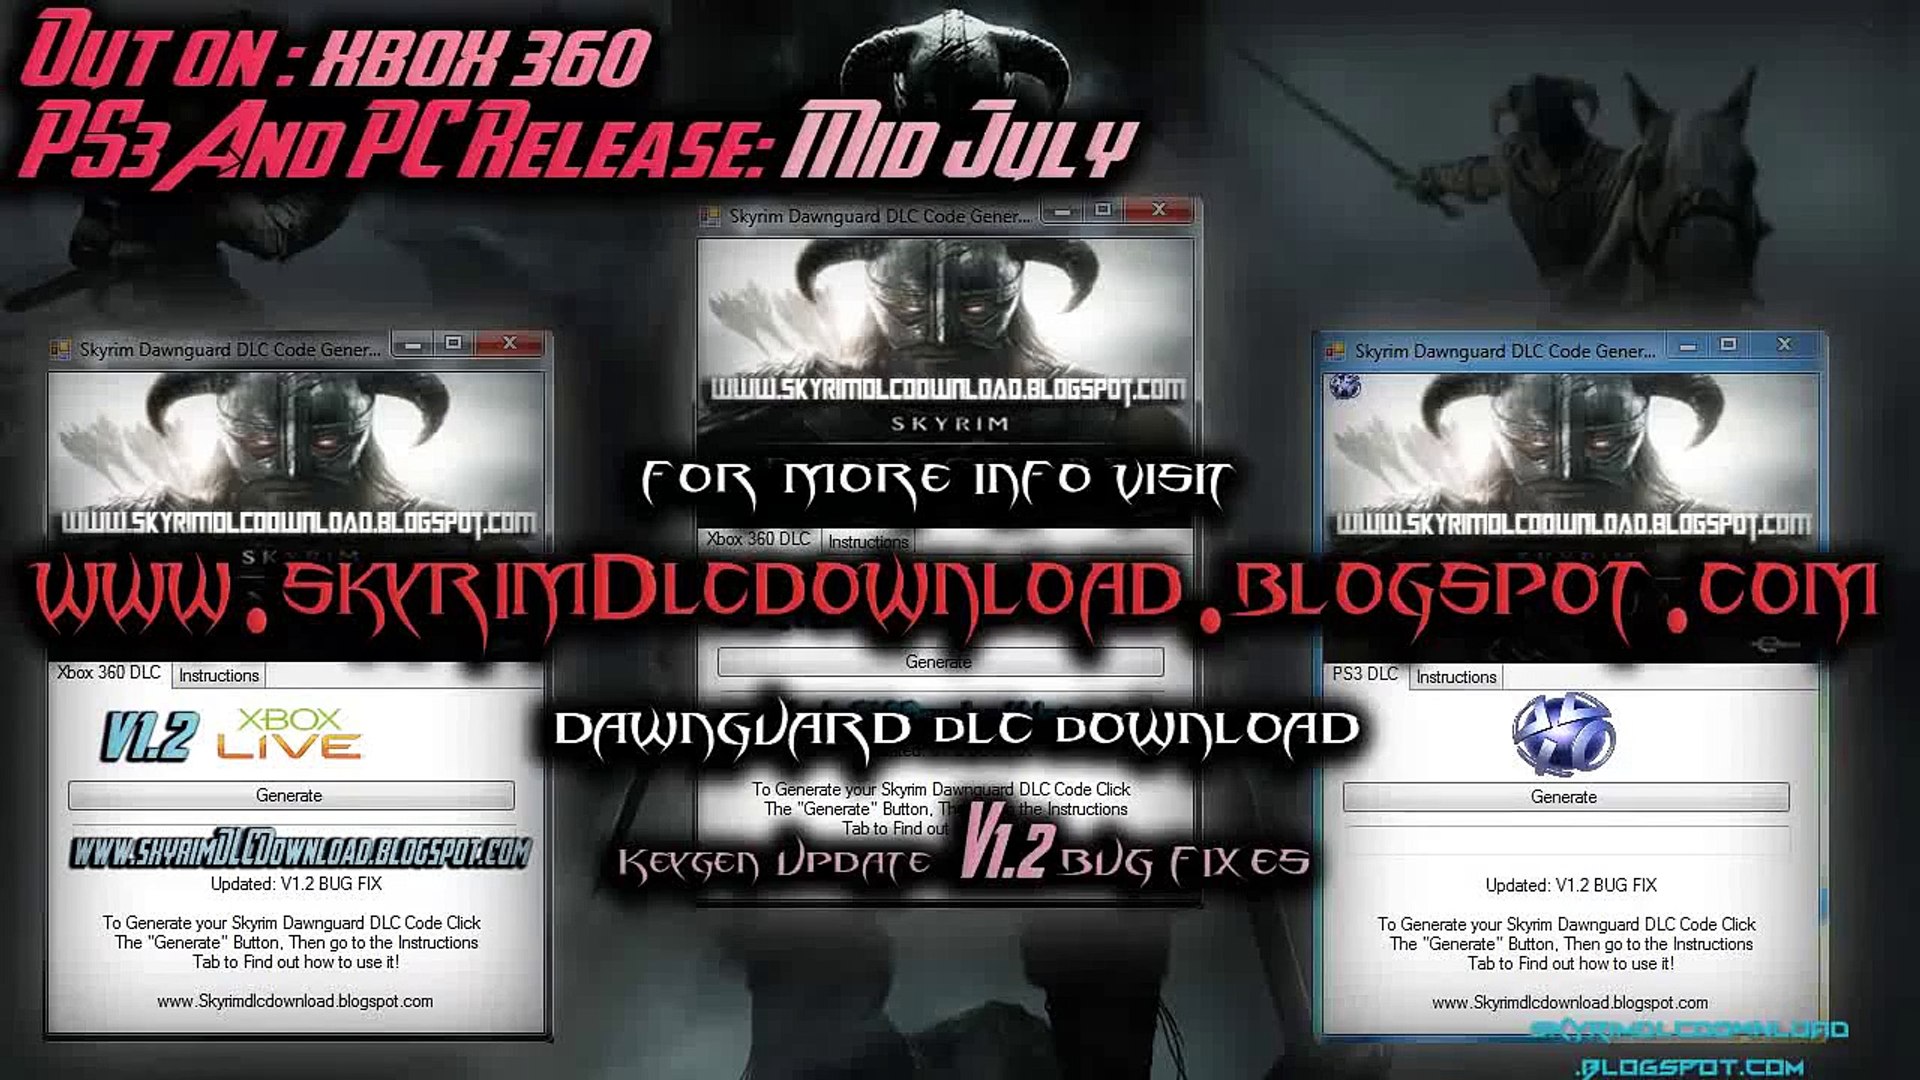 Skyrim Dawnguard DLC Codes FREE PS3, PC & XBOX 360! - video Dailymotion